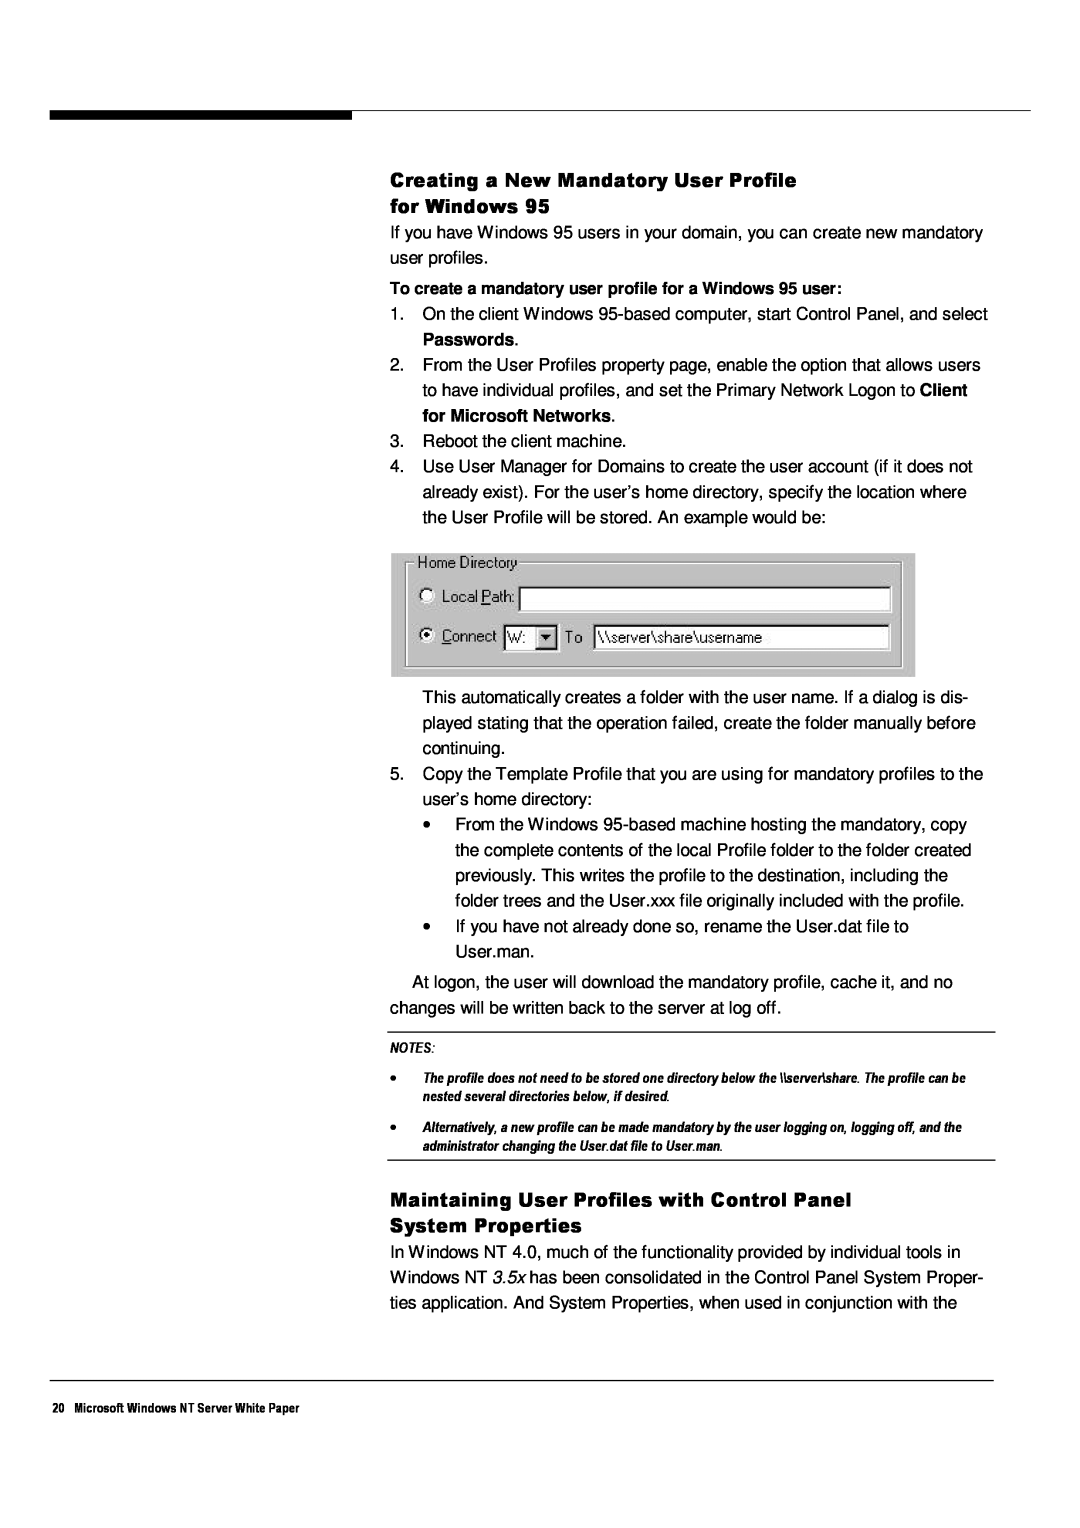 Microsoft Windows NT 4.0 manual Creating a New Mandatory User Profile for Windows 